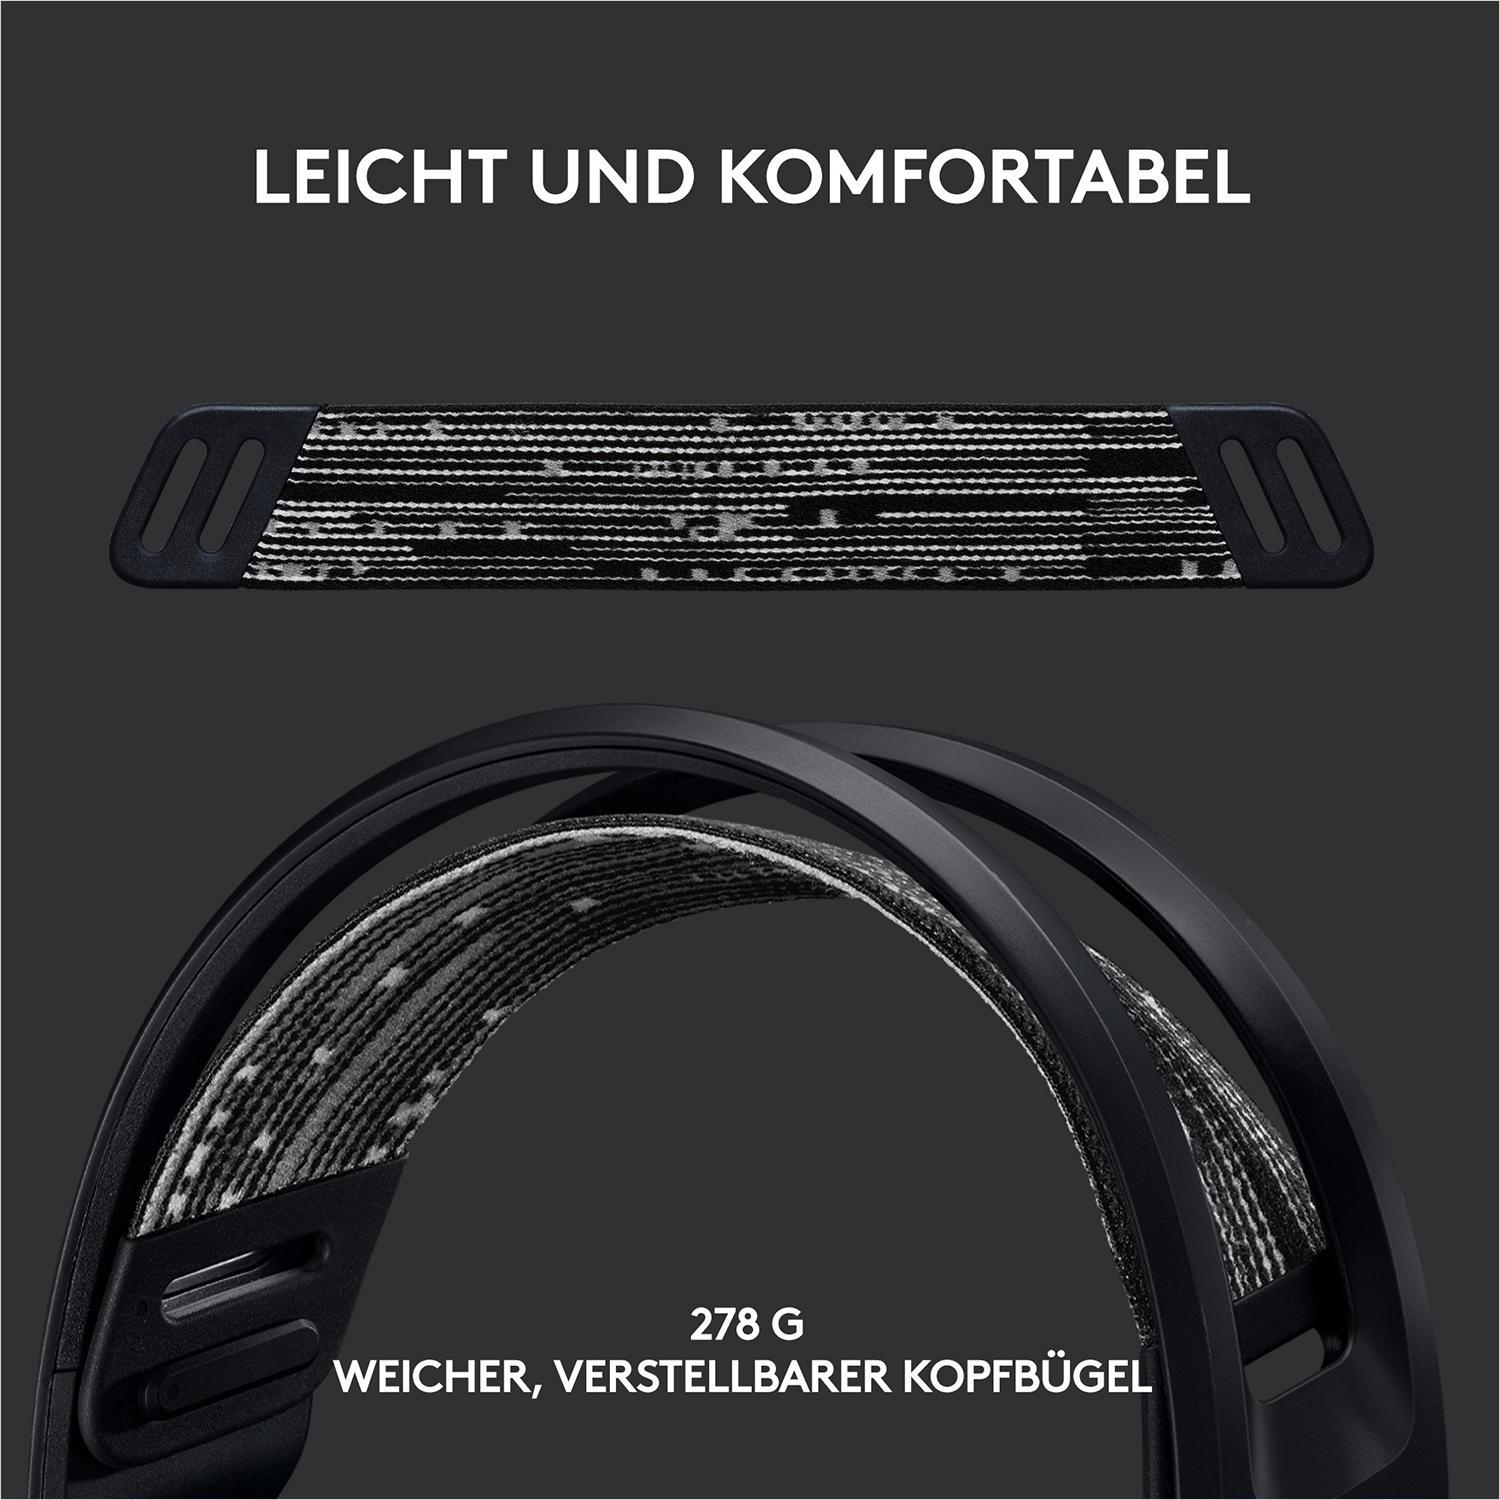 Over-ear Headset Light RGB Speed kabelloses, LIGHTSYNC G733 Schwarz Gaming LOGITECH